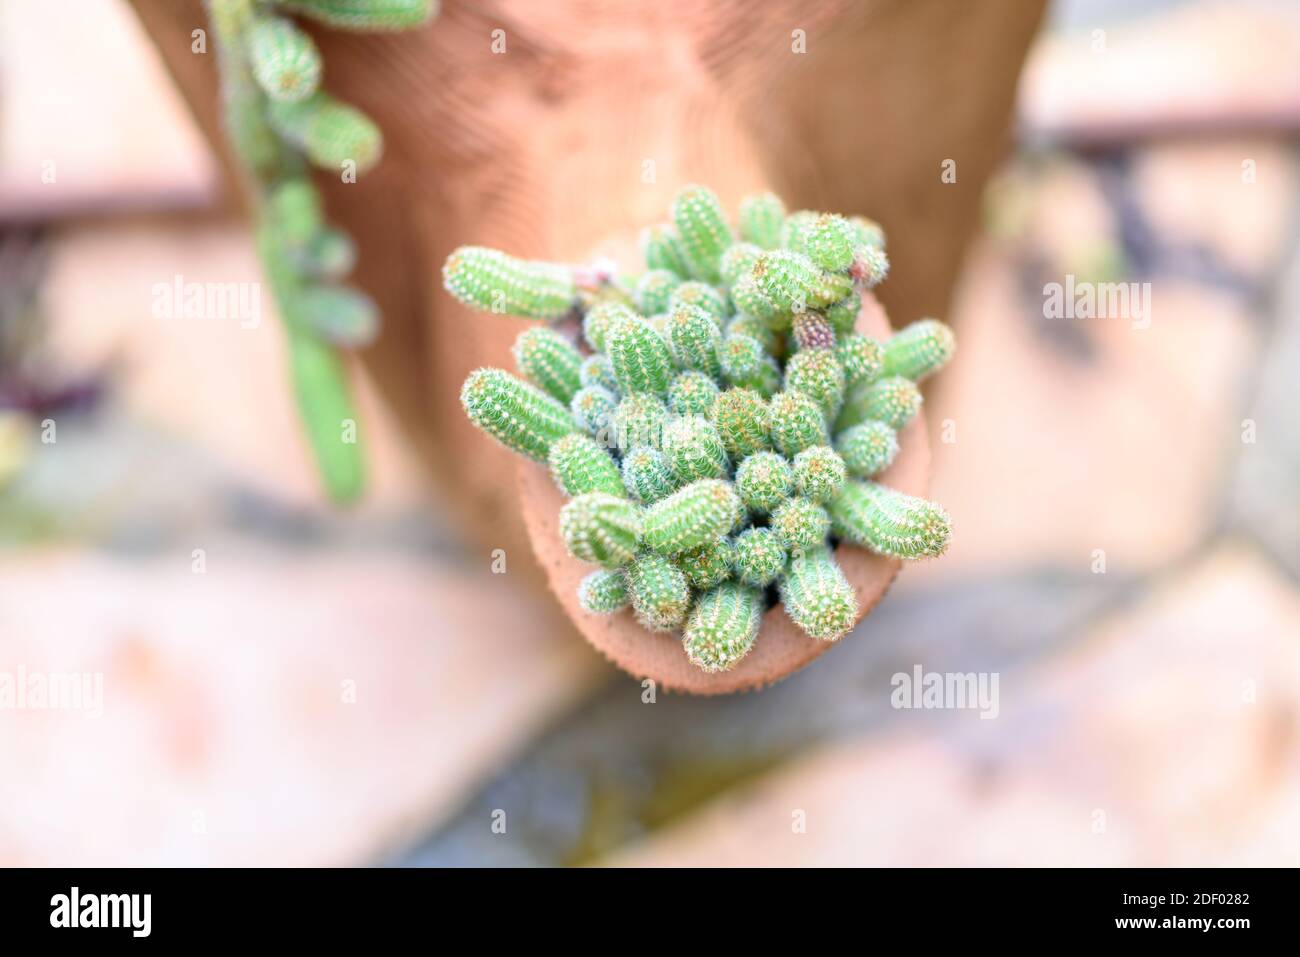 Cactus Plant In Garden. Cactus Plant In Flower Pot. Stock Photo